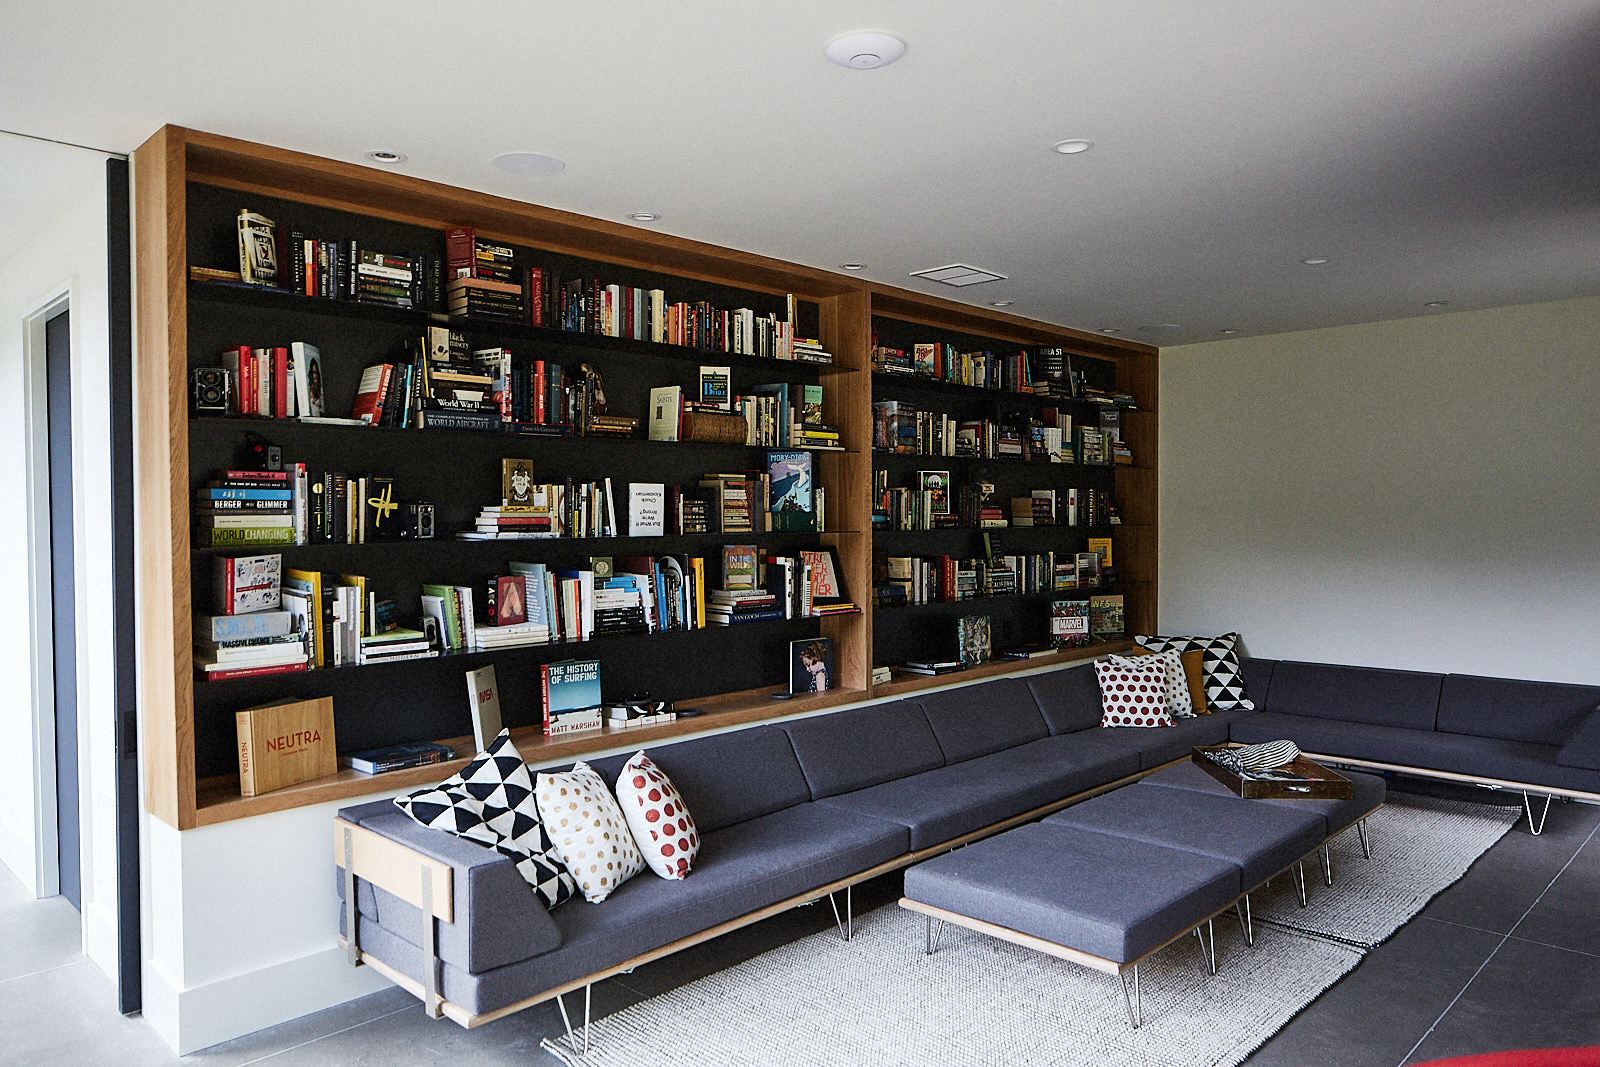 evergreen-portfolio-danish-modern-shingle-home-interior-LR-living-room-bookshelf-couch